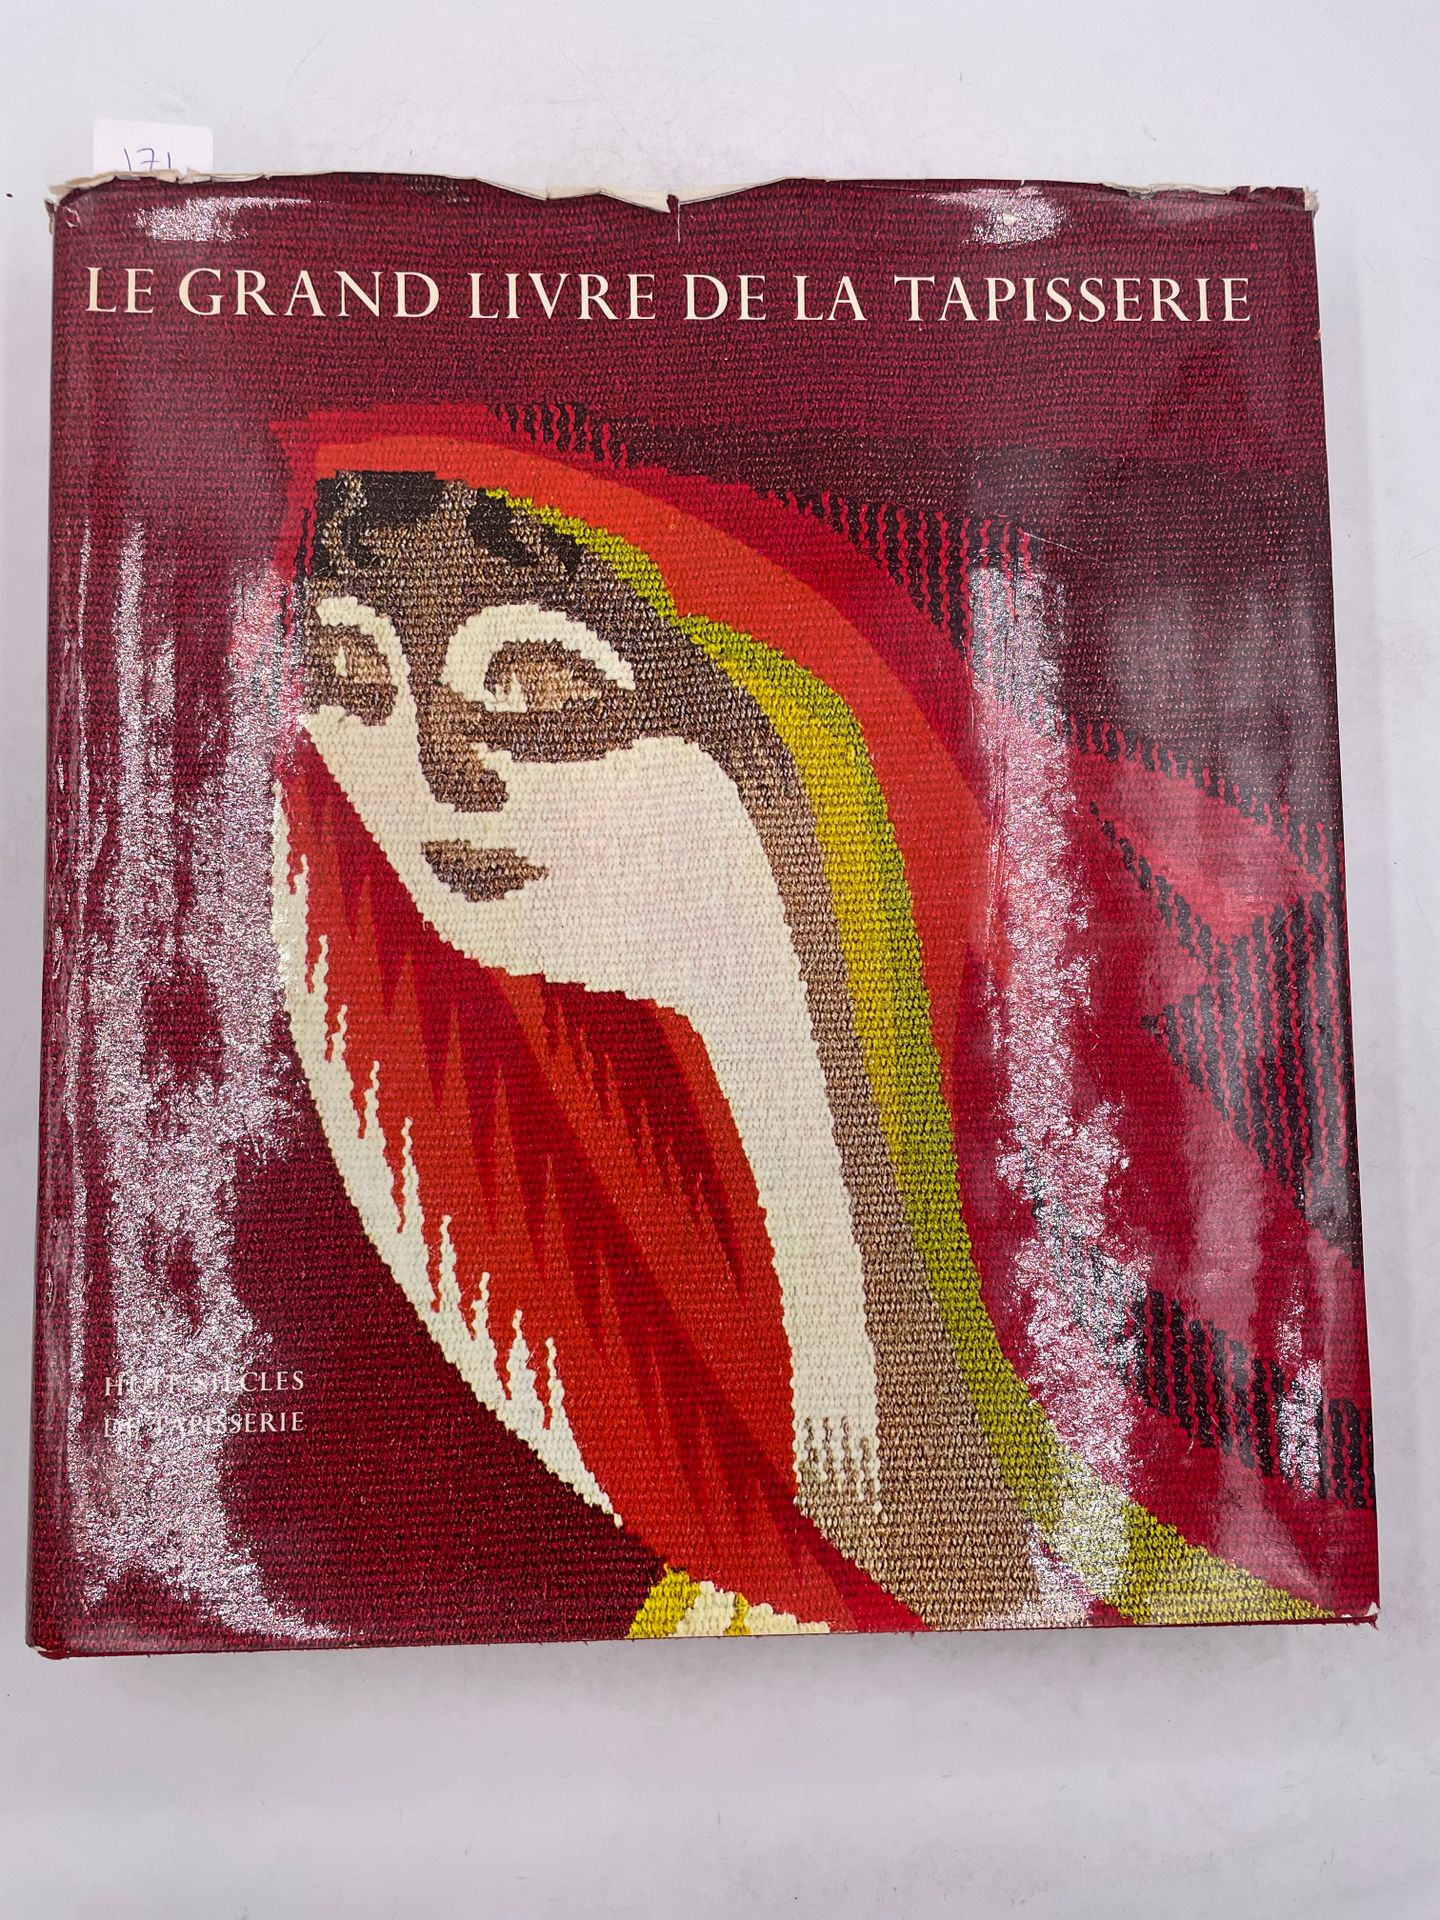 Null "Le grand livre de la tapisserie", Pierre Verlet y varios autores, Ed. Bibl&hellip;